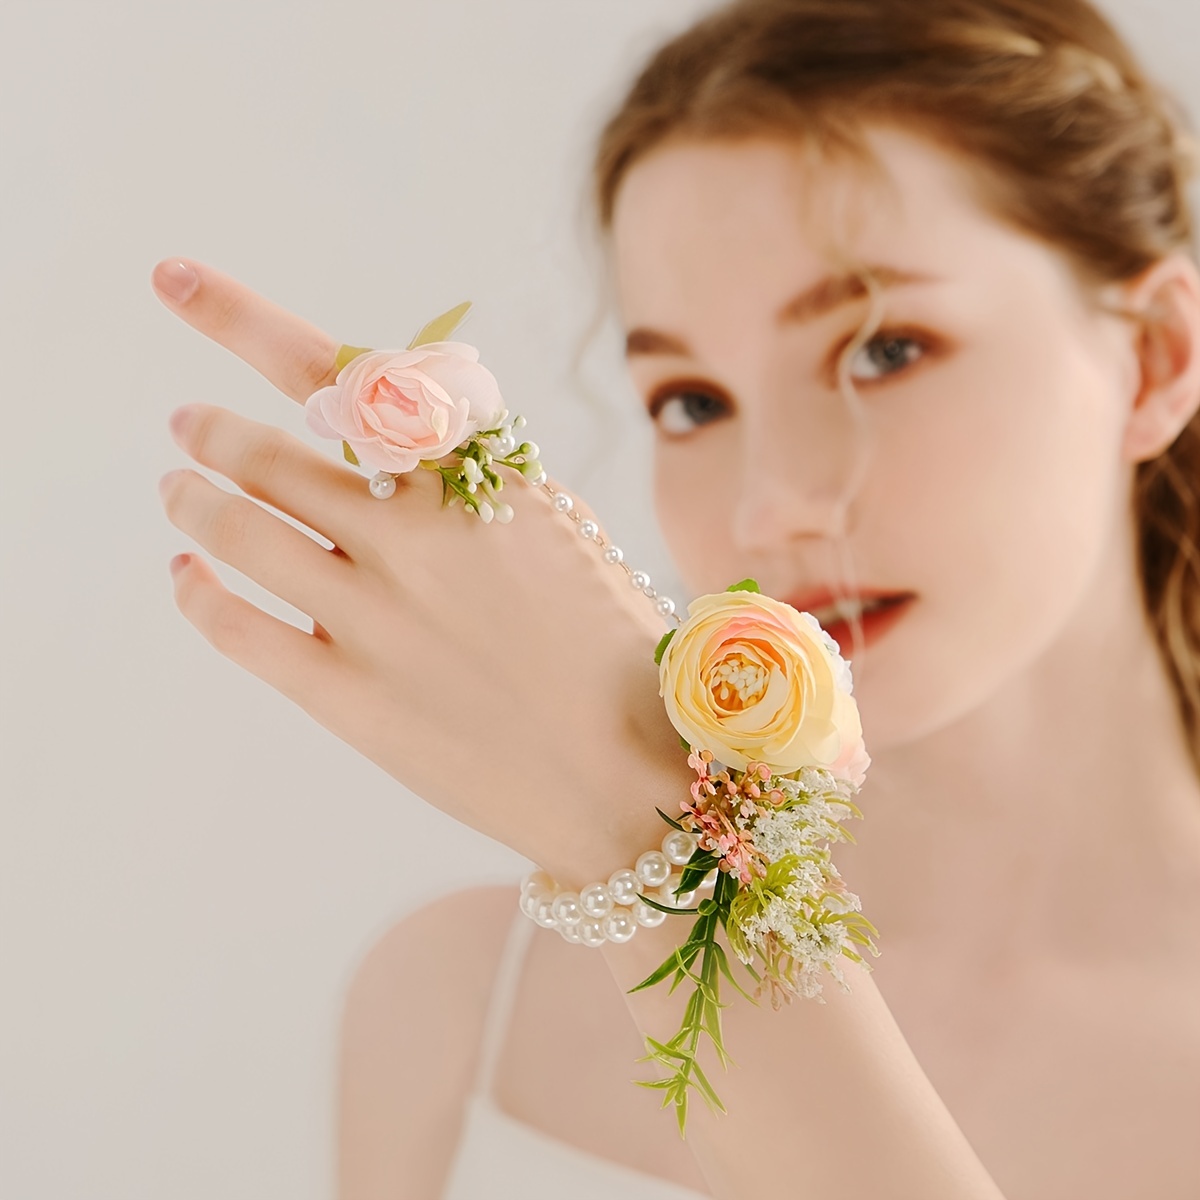 Wrist Corsages for Wedding Hand Flower Bridesmaid Bracelet Wedding